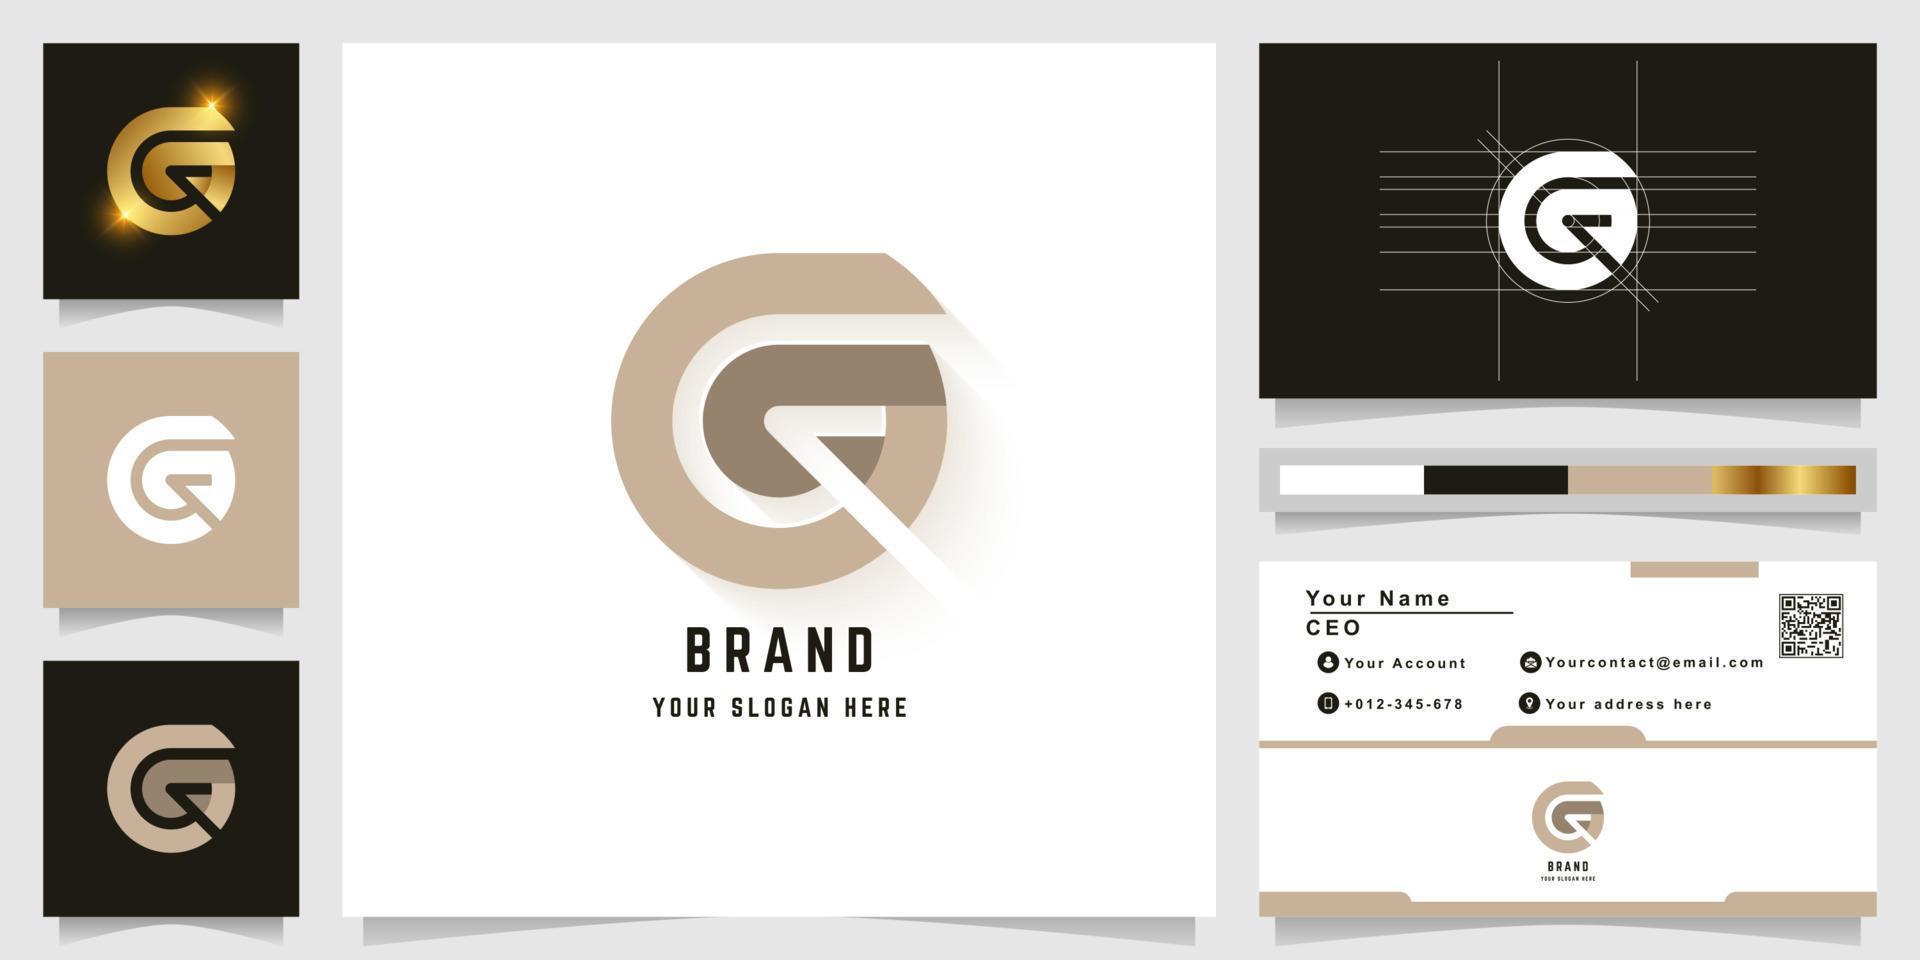 Letter G or Ga monogram logo with business card design vector